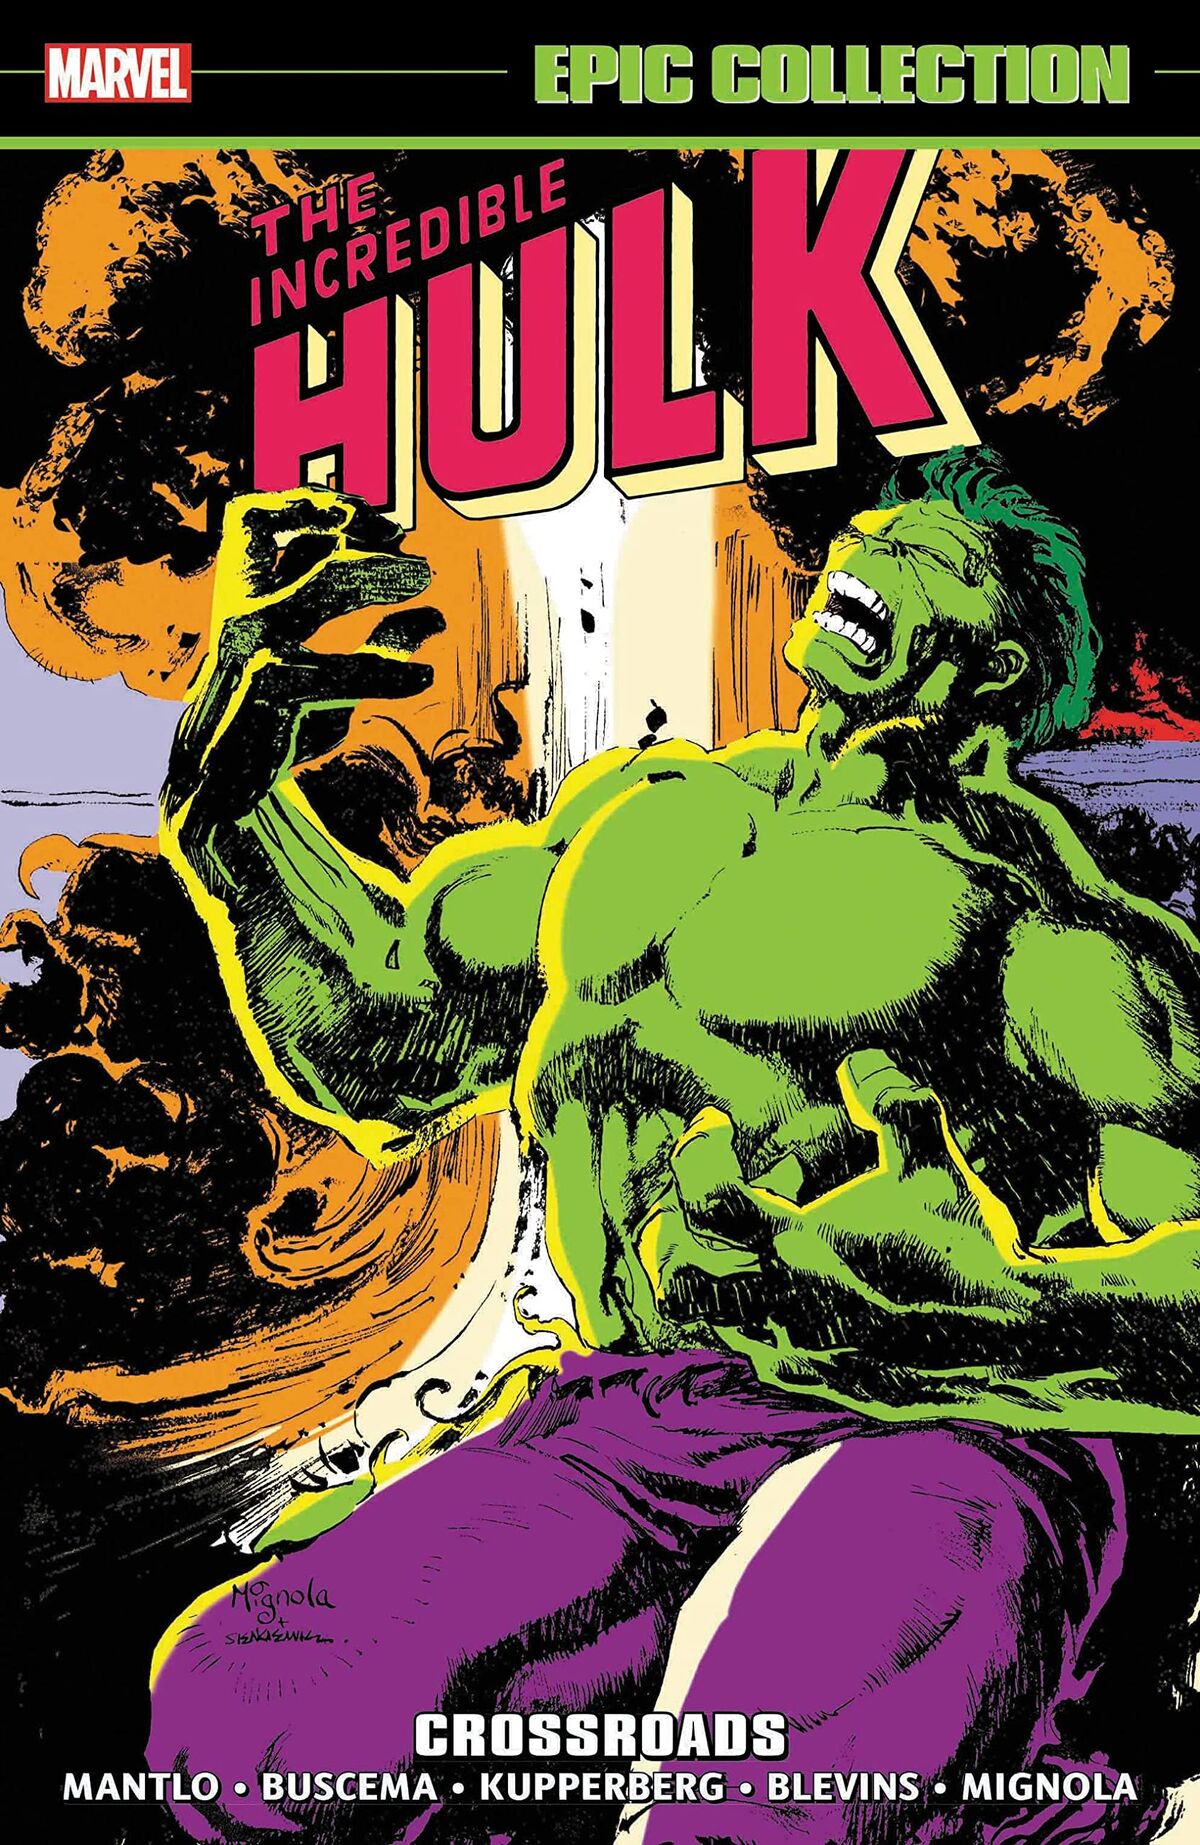 Epic Collection: Incredible Hulk Vol 1 13 | Marvel Database | Fandom